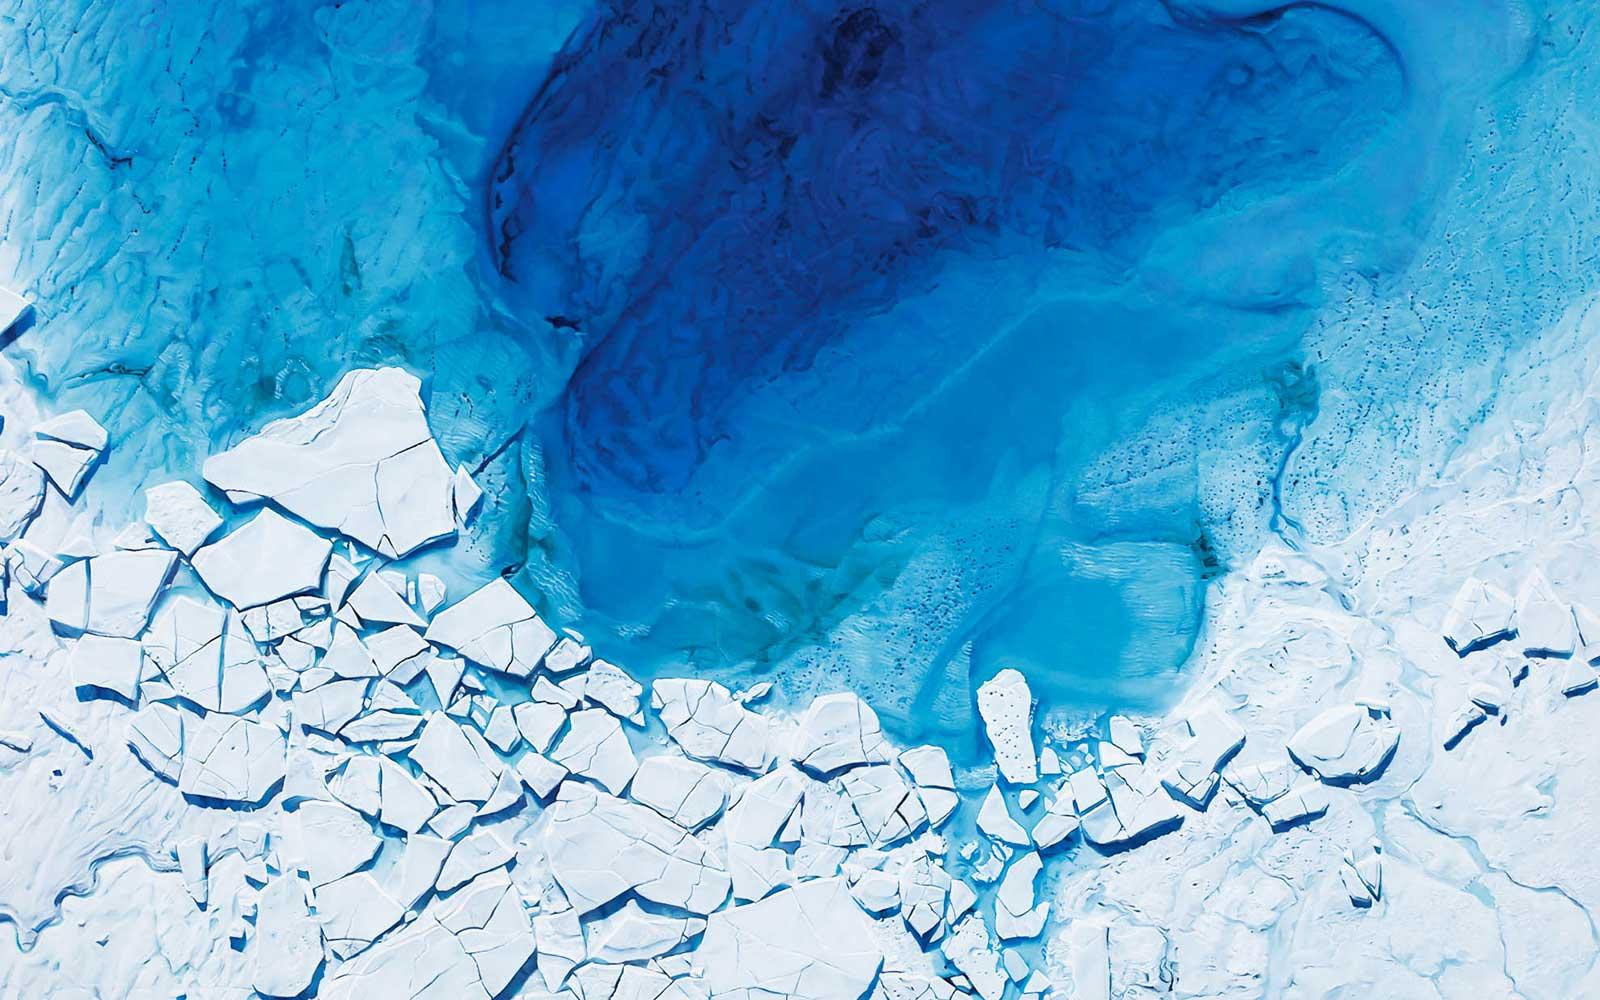 Zaria Forman, Supraglacial Lake (between Hiawatha and Humboldt Glaciers), Greenland, 79° 6'59.05"N 65°15'54.99"W, July 19, 2017, 2018. Soft pastel on paper. 60 x 81 7/8 in.